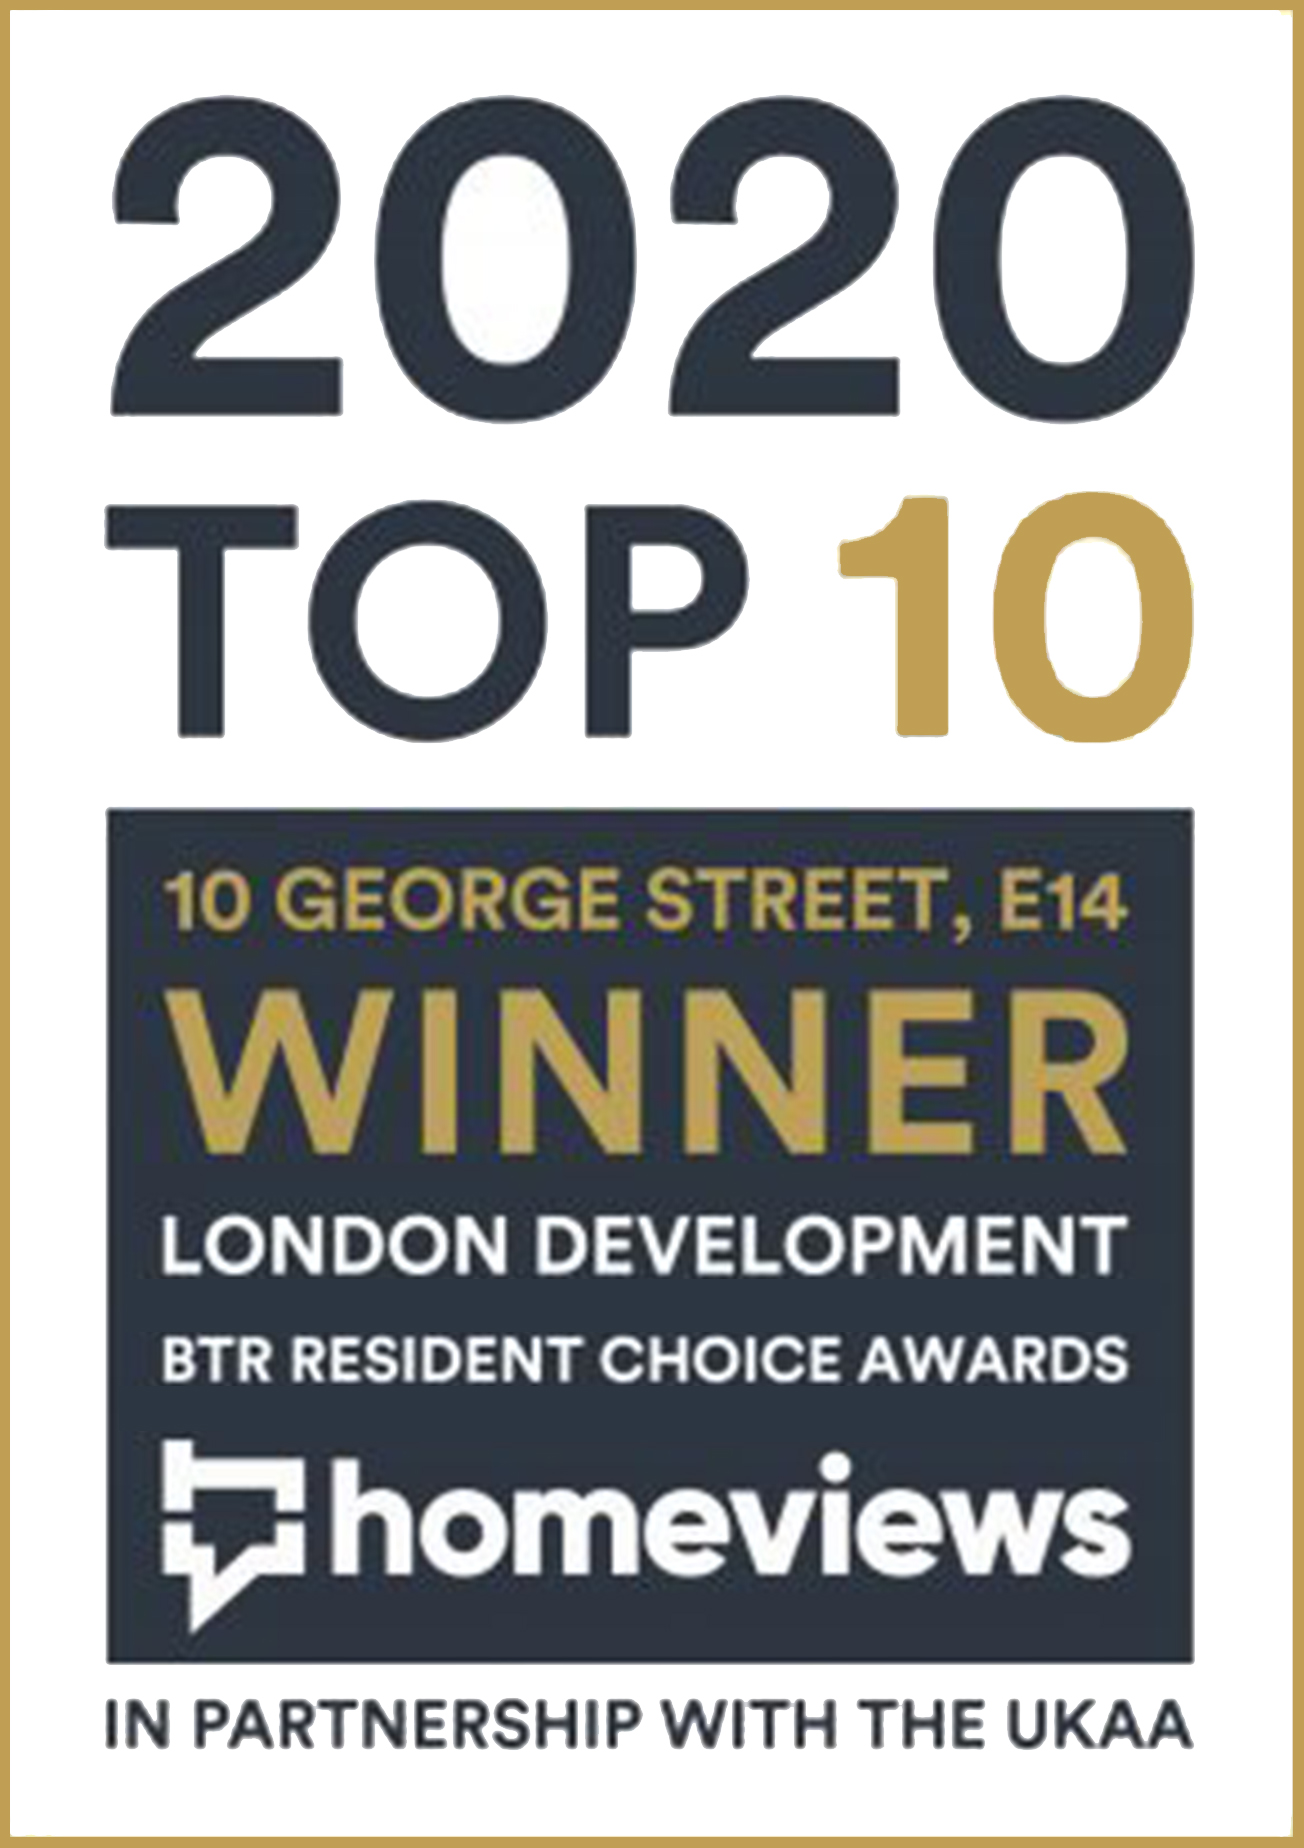 Homeviews BTR Resident Choice Awards | 10 George Street